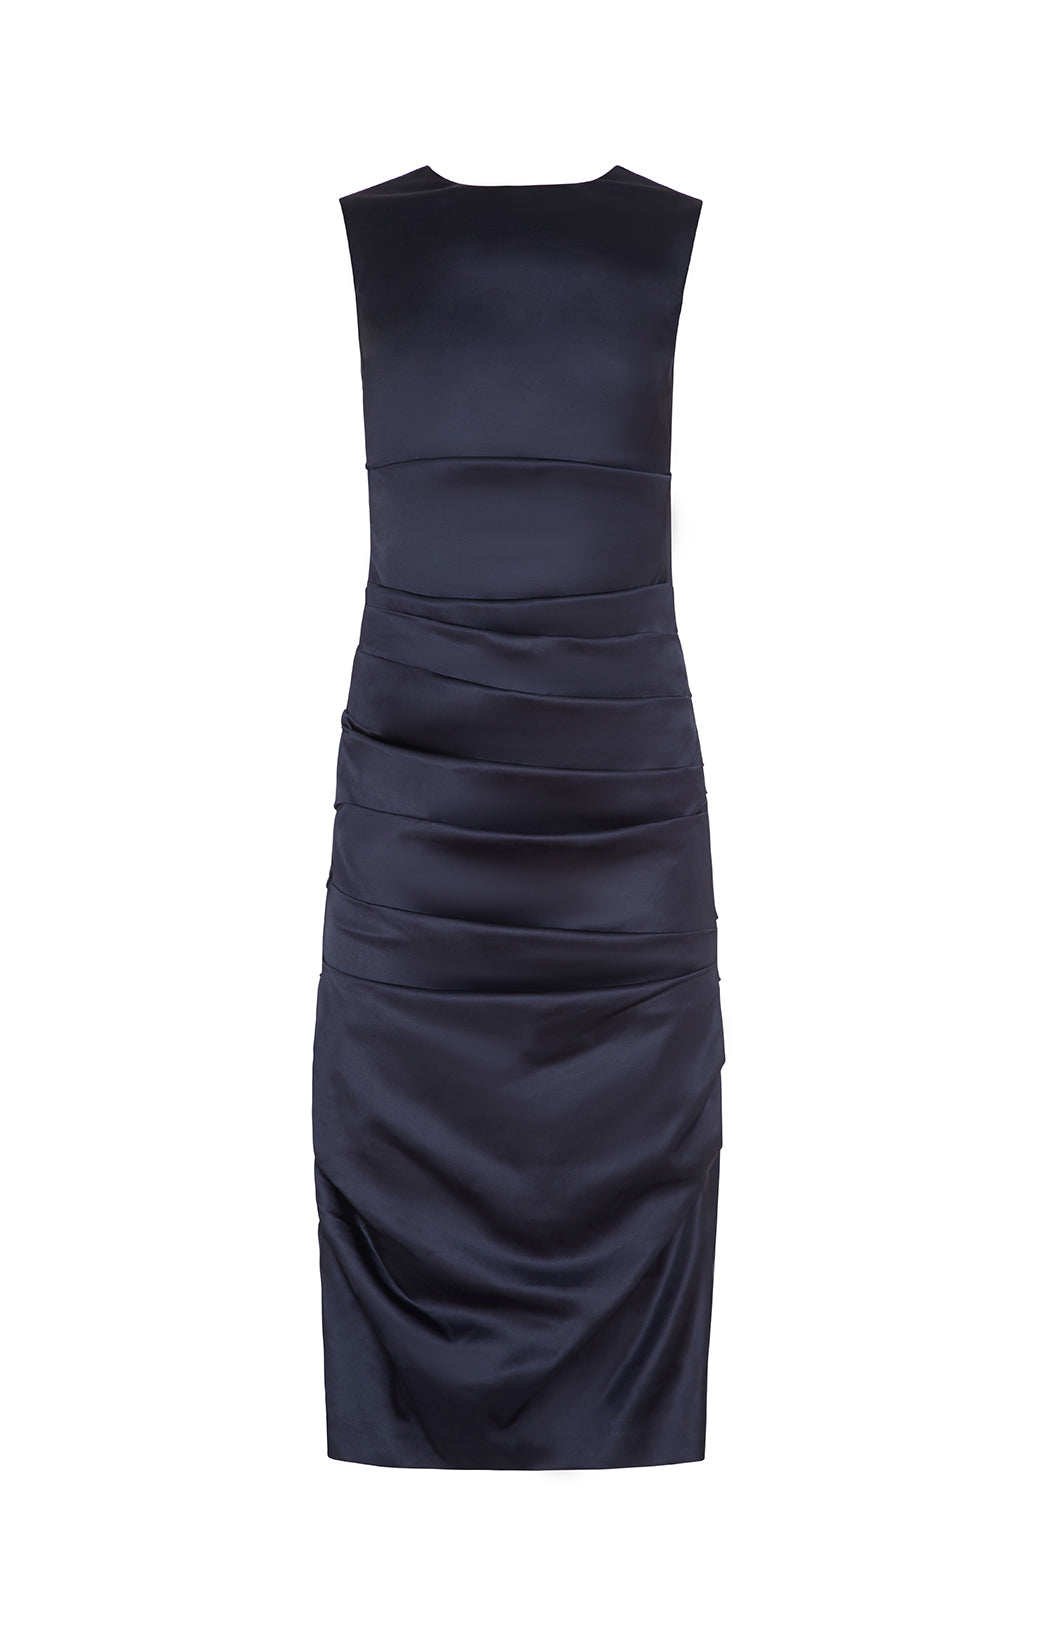 Bjork - Intarsia Knit Jacquard Dress - Product Image